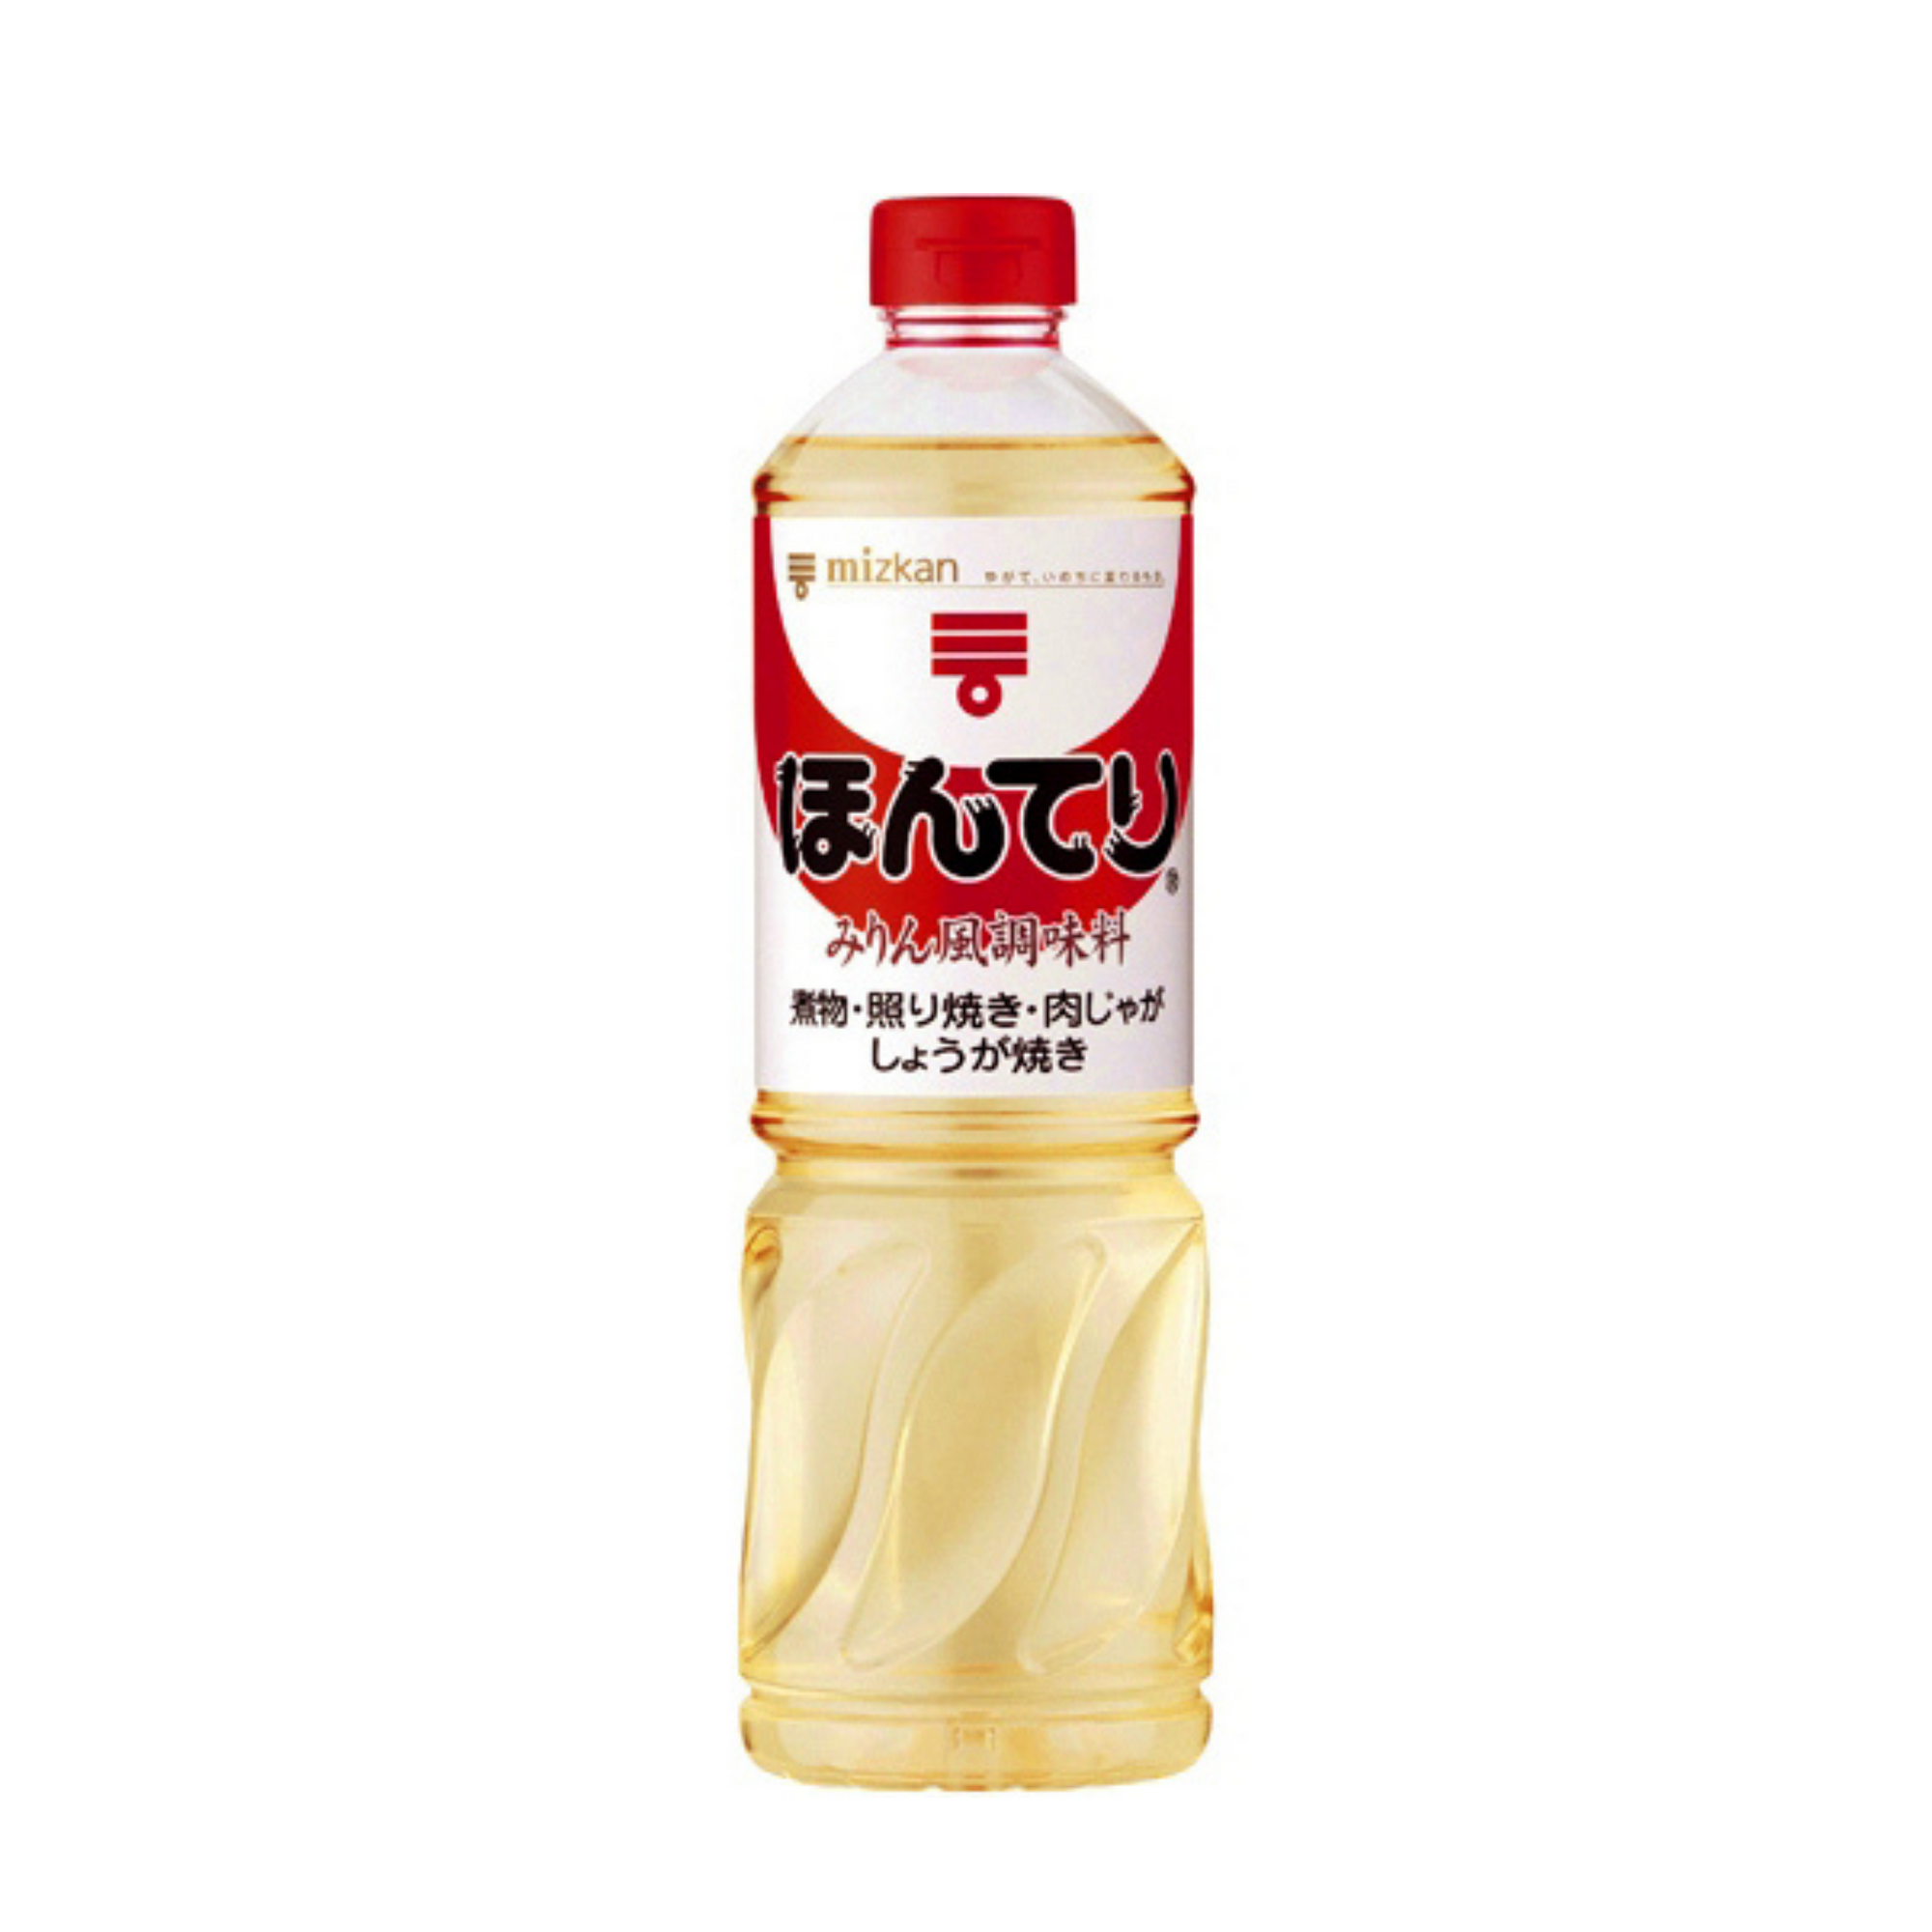 Japanese Sweet Seasoning Sauce - 1ltr